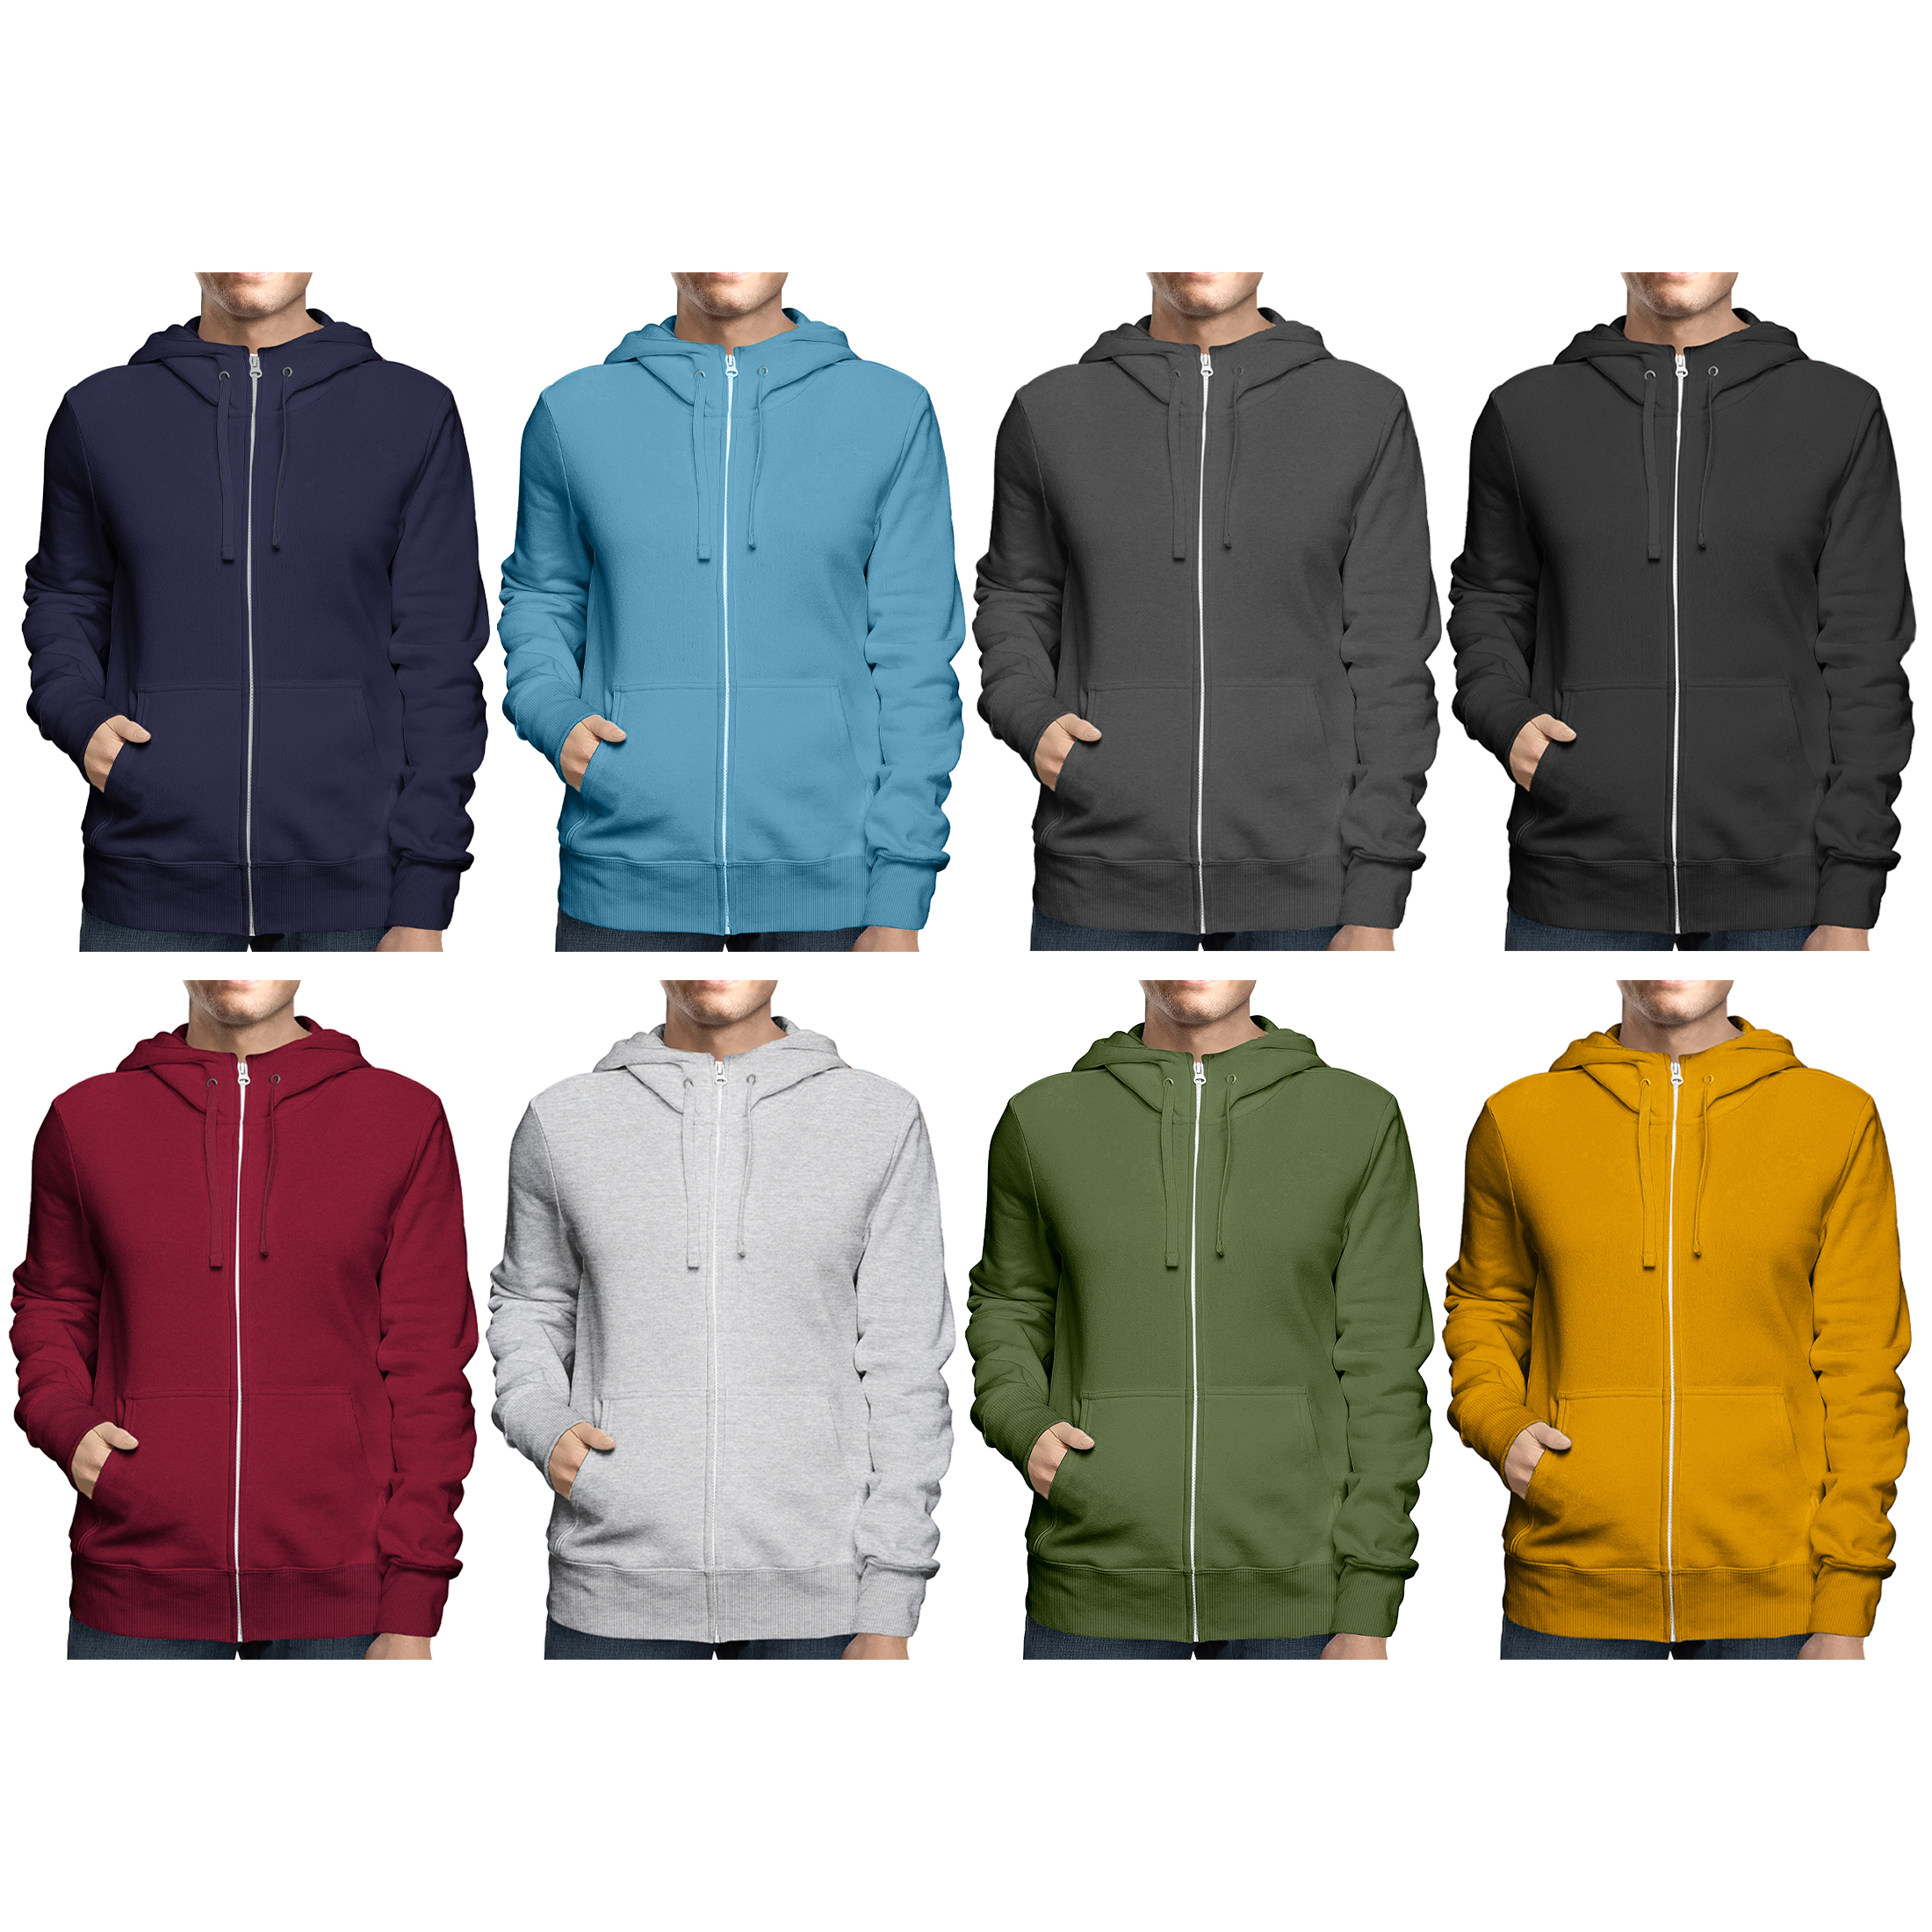 2-Pack: Men's Full Zip Up Fleece-Lined Hoodie Sweatshirt (Big & Tall Size Available) - Black & Charcoal, Medium